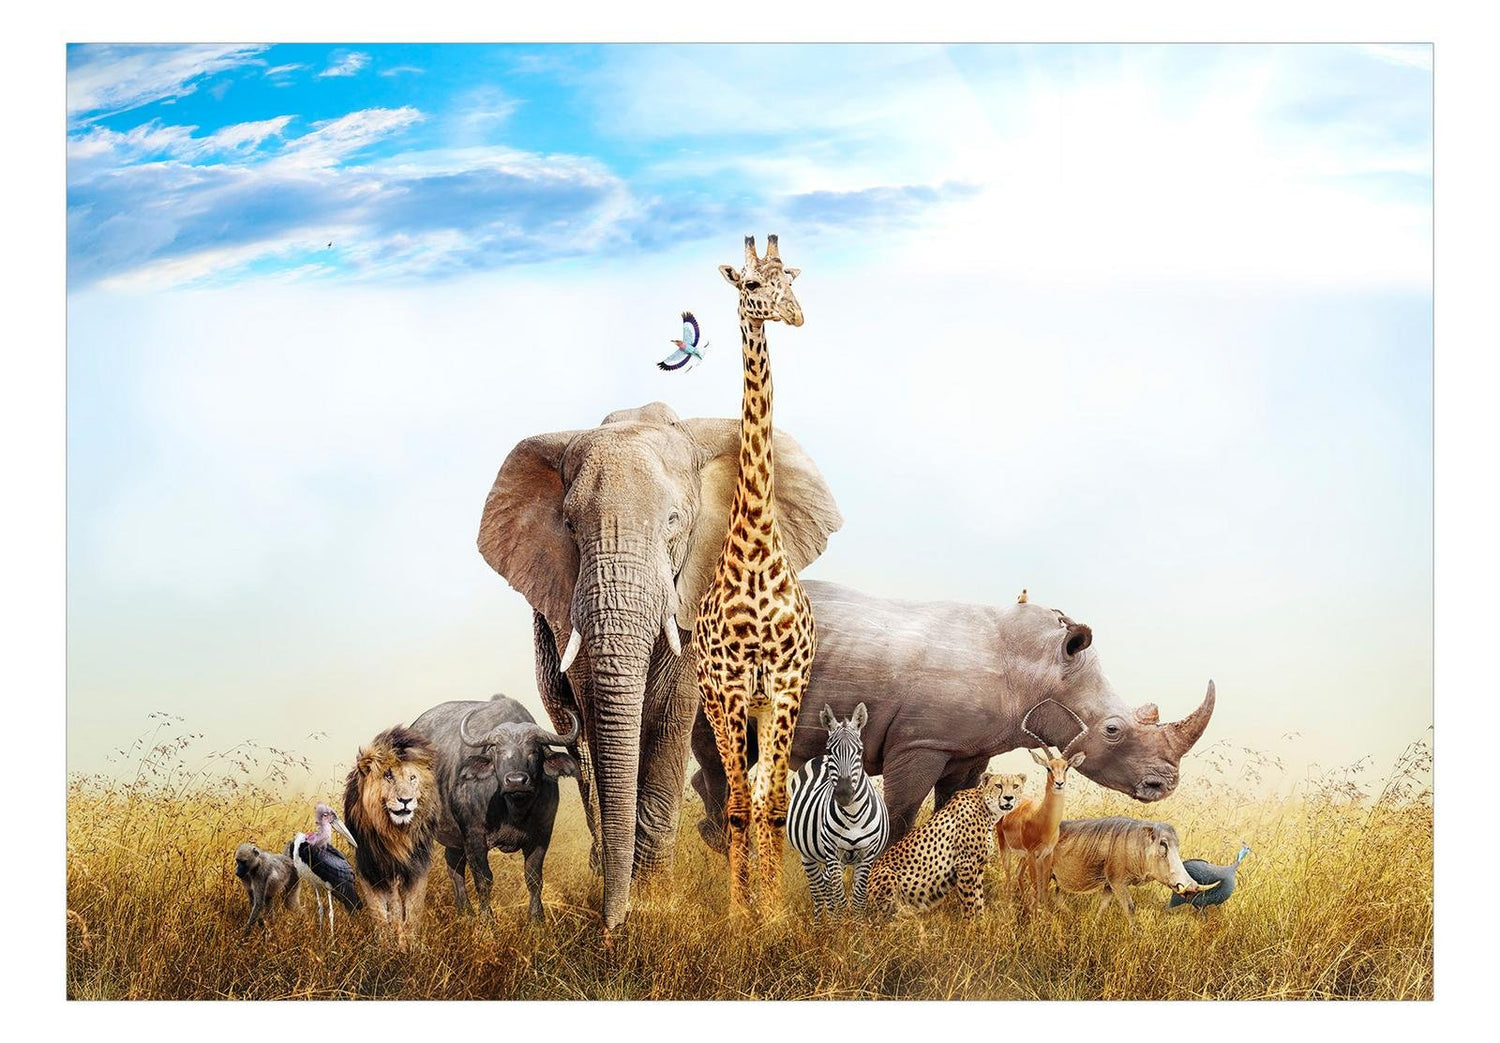 Animal Wall Mural - Fauna Of Africa-Tiptophomedecor